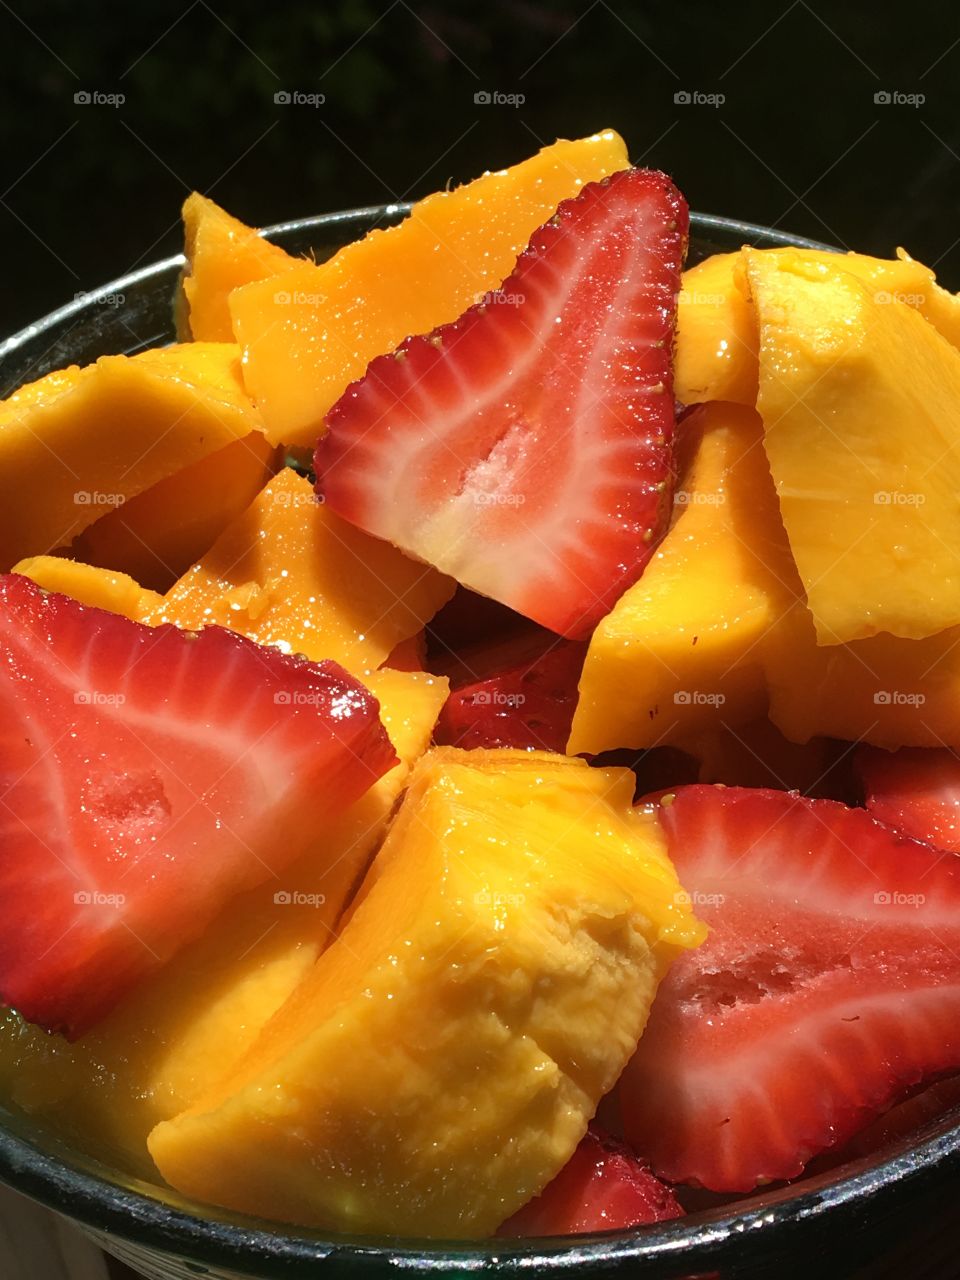 Strawberries & mango - fruit bowl